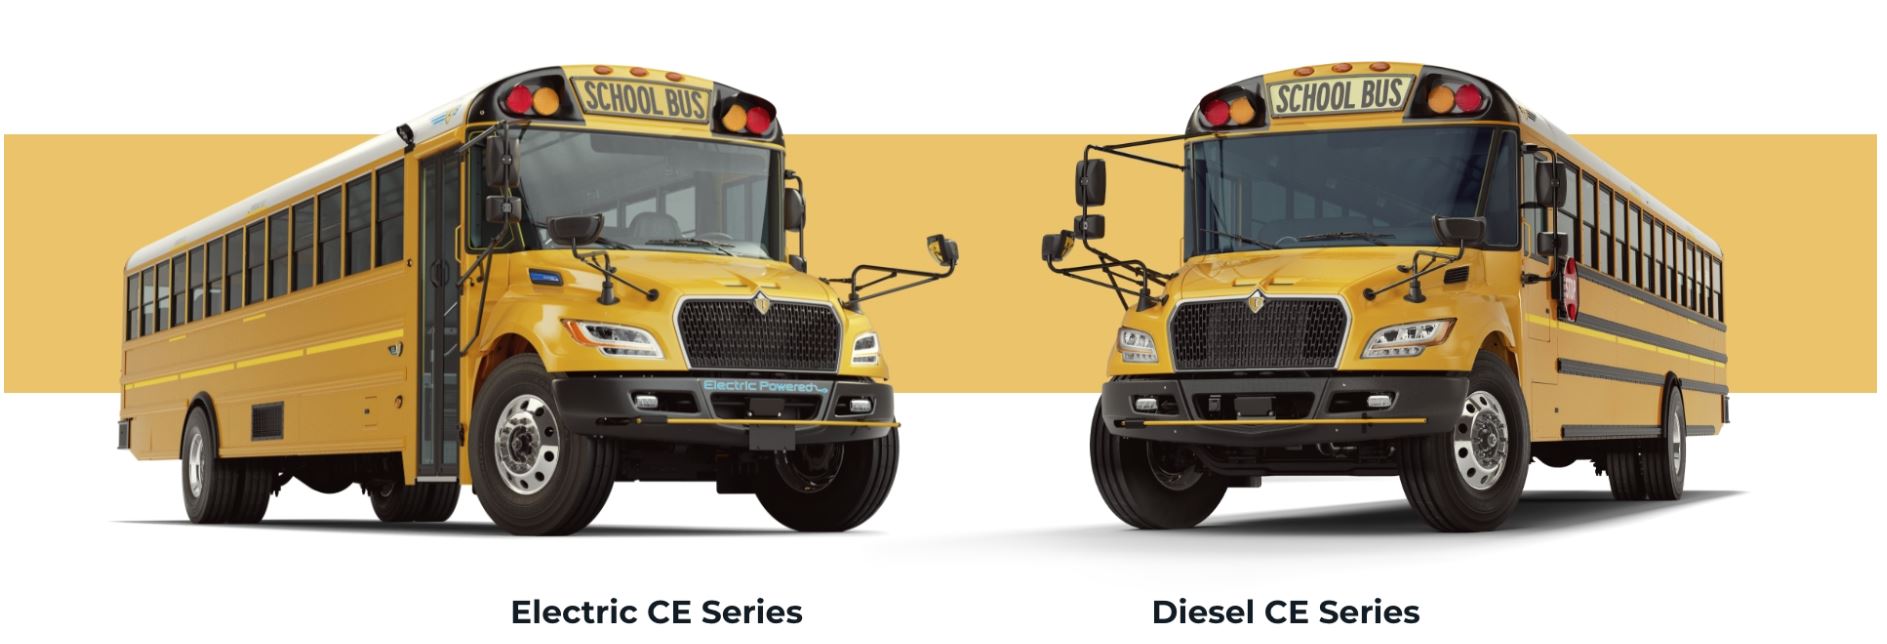 The Next Generation IC Bus CE Series School Bus